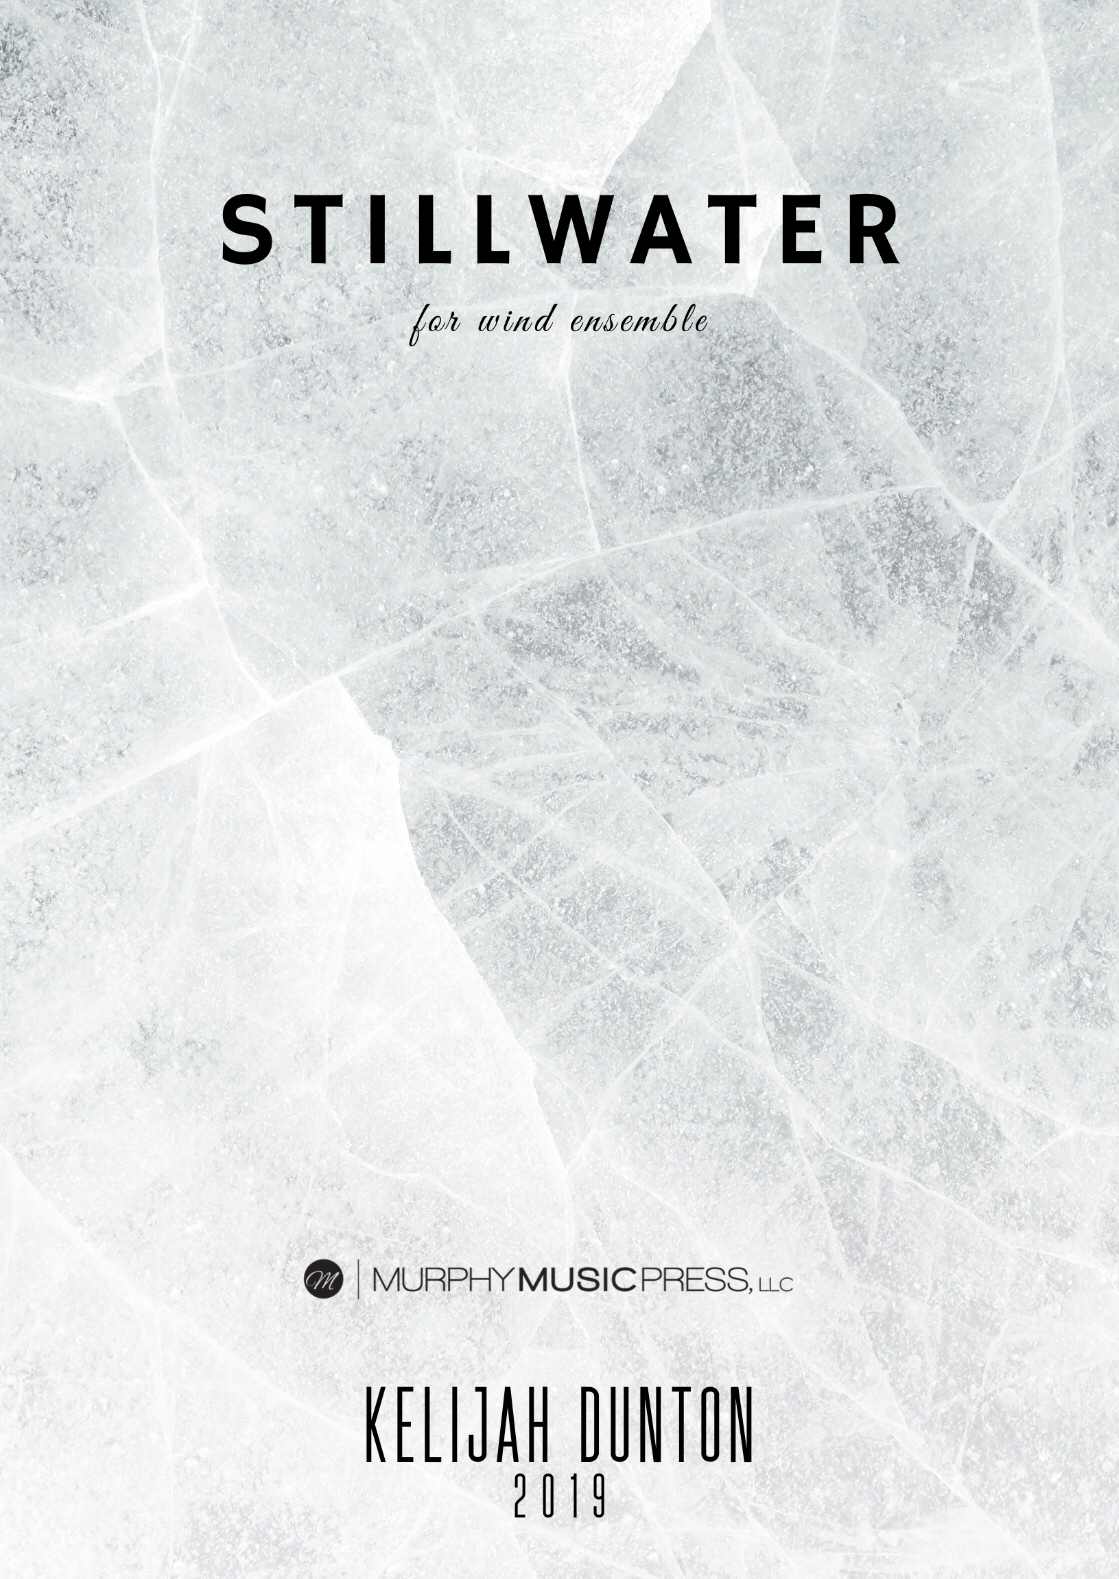 Stillwater by Kelijah Dunton